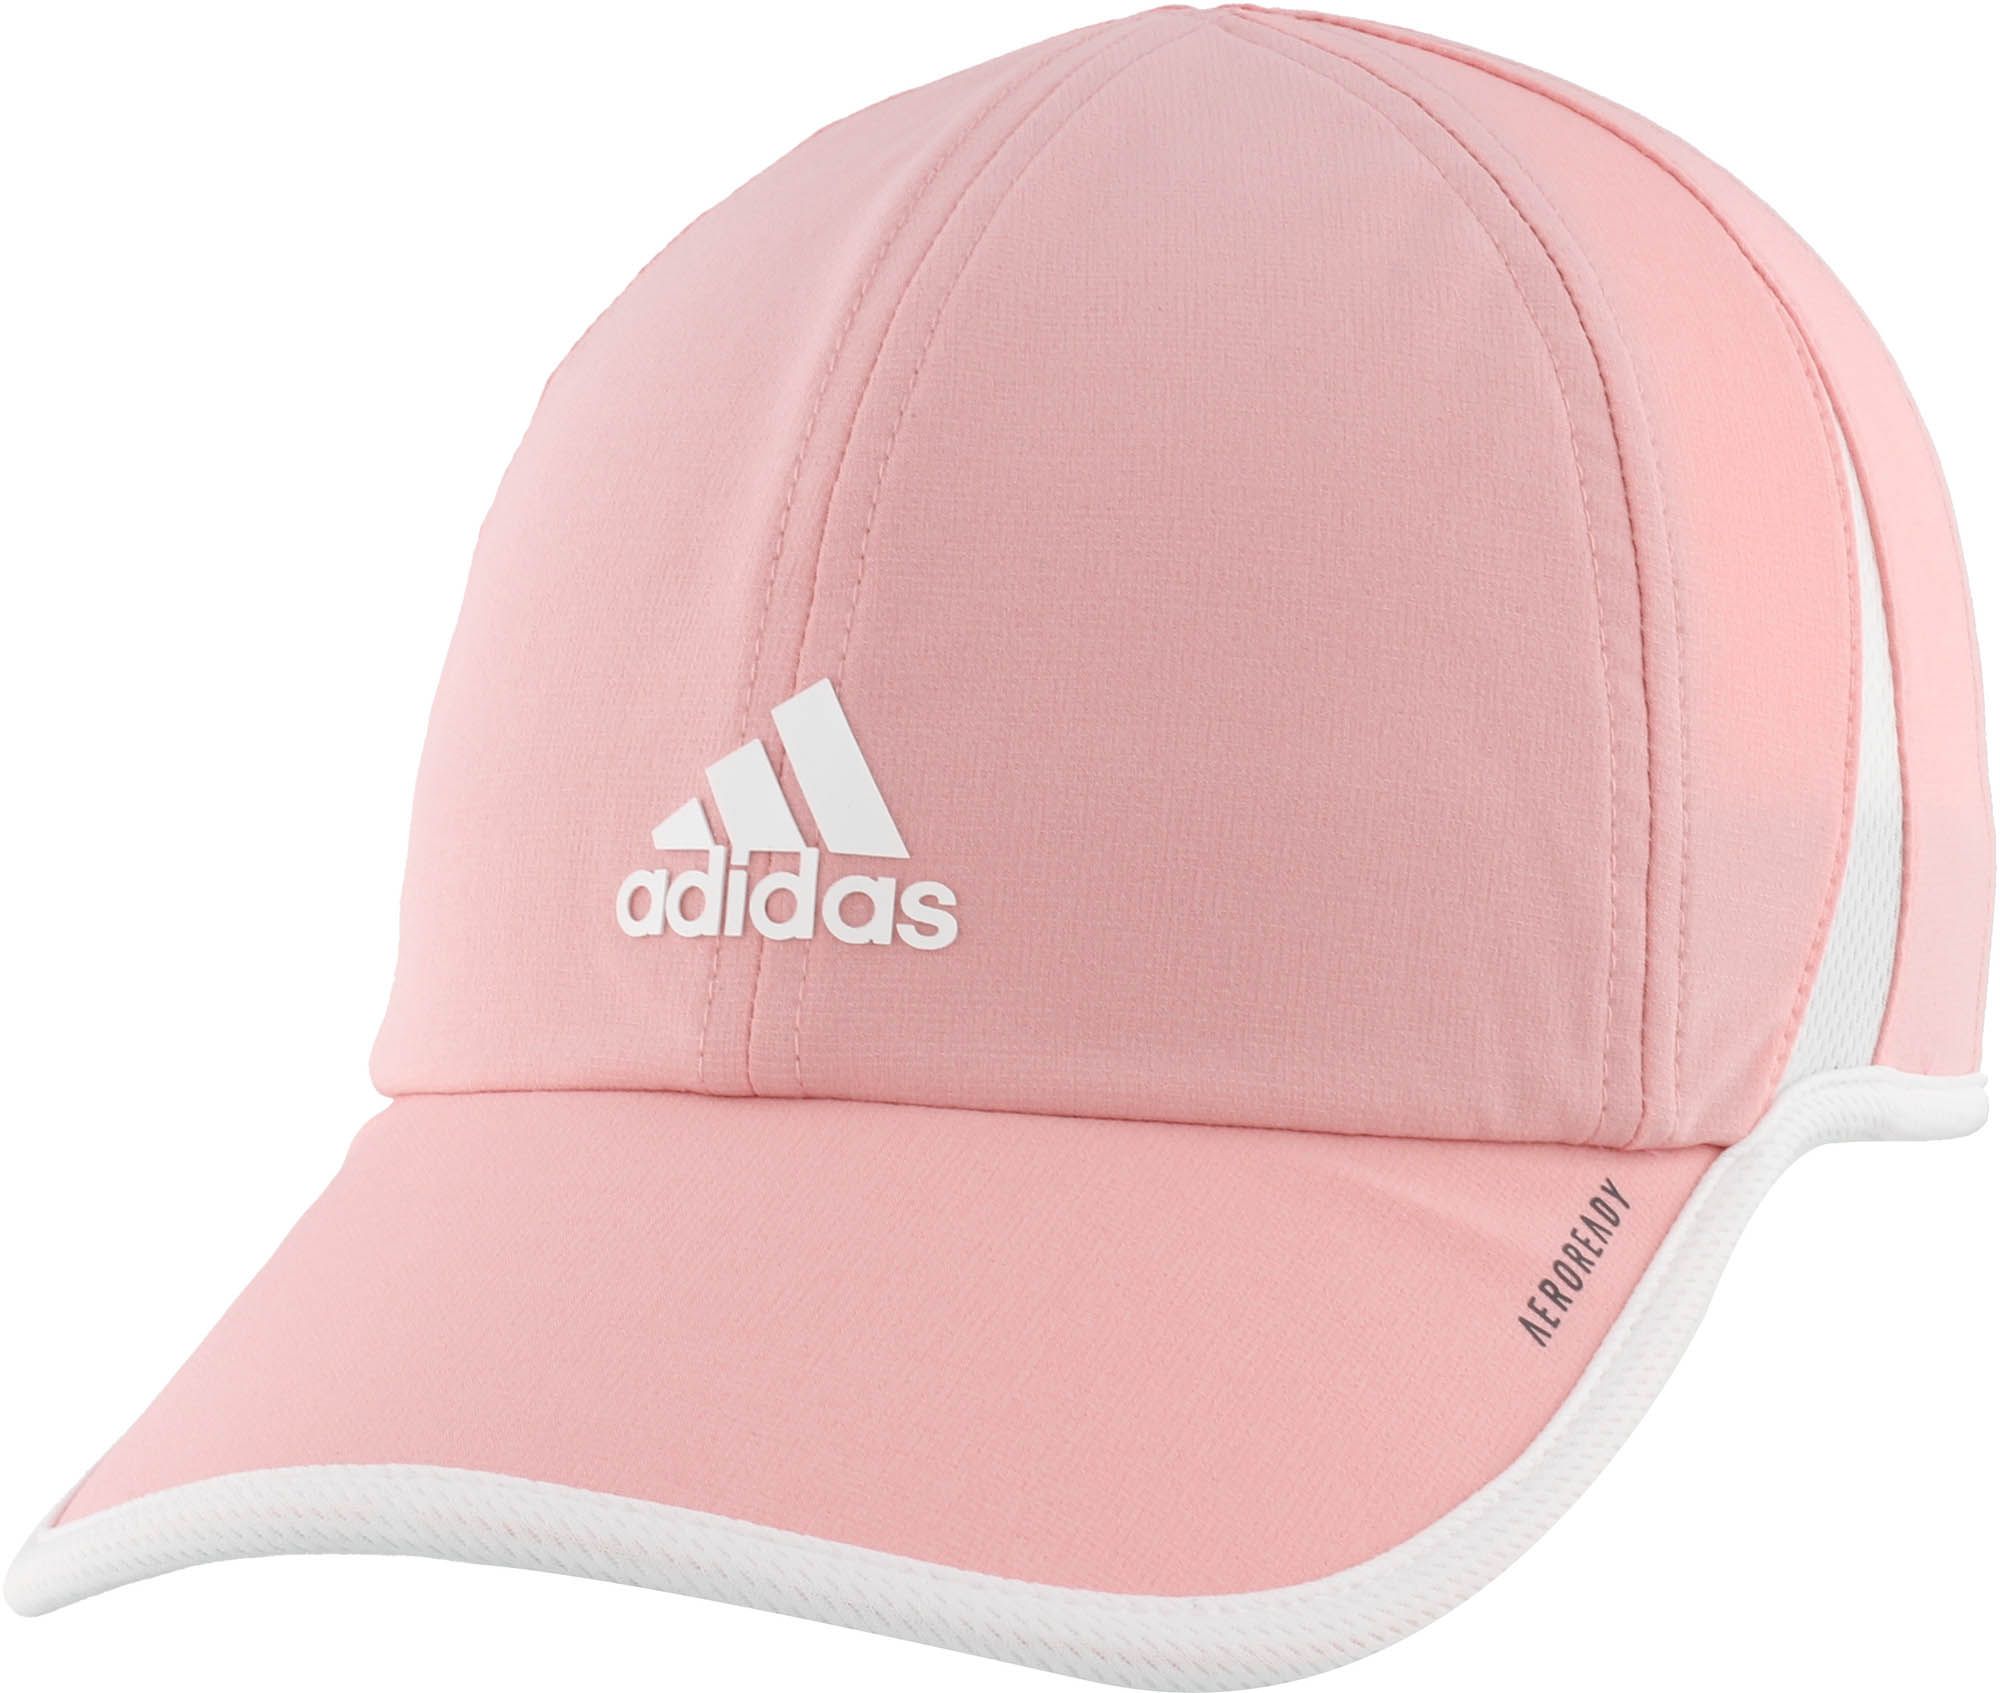 adidas women's climacool hat